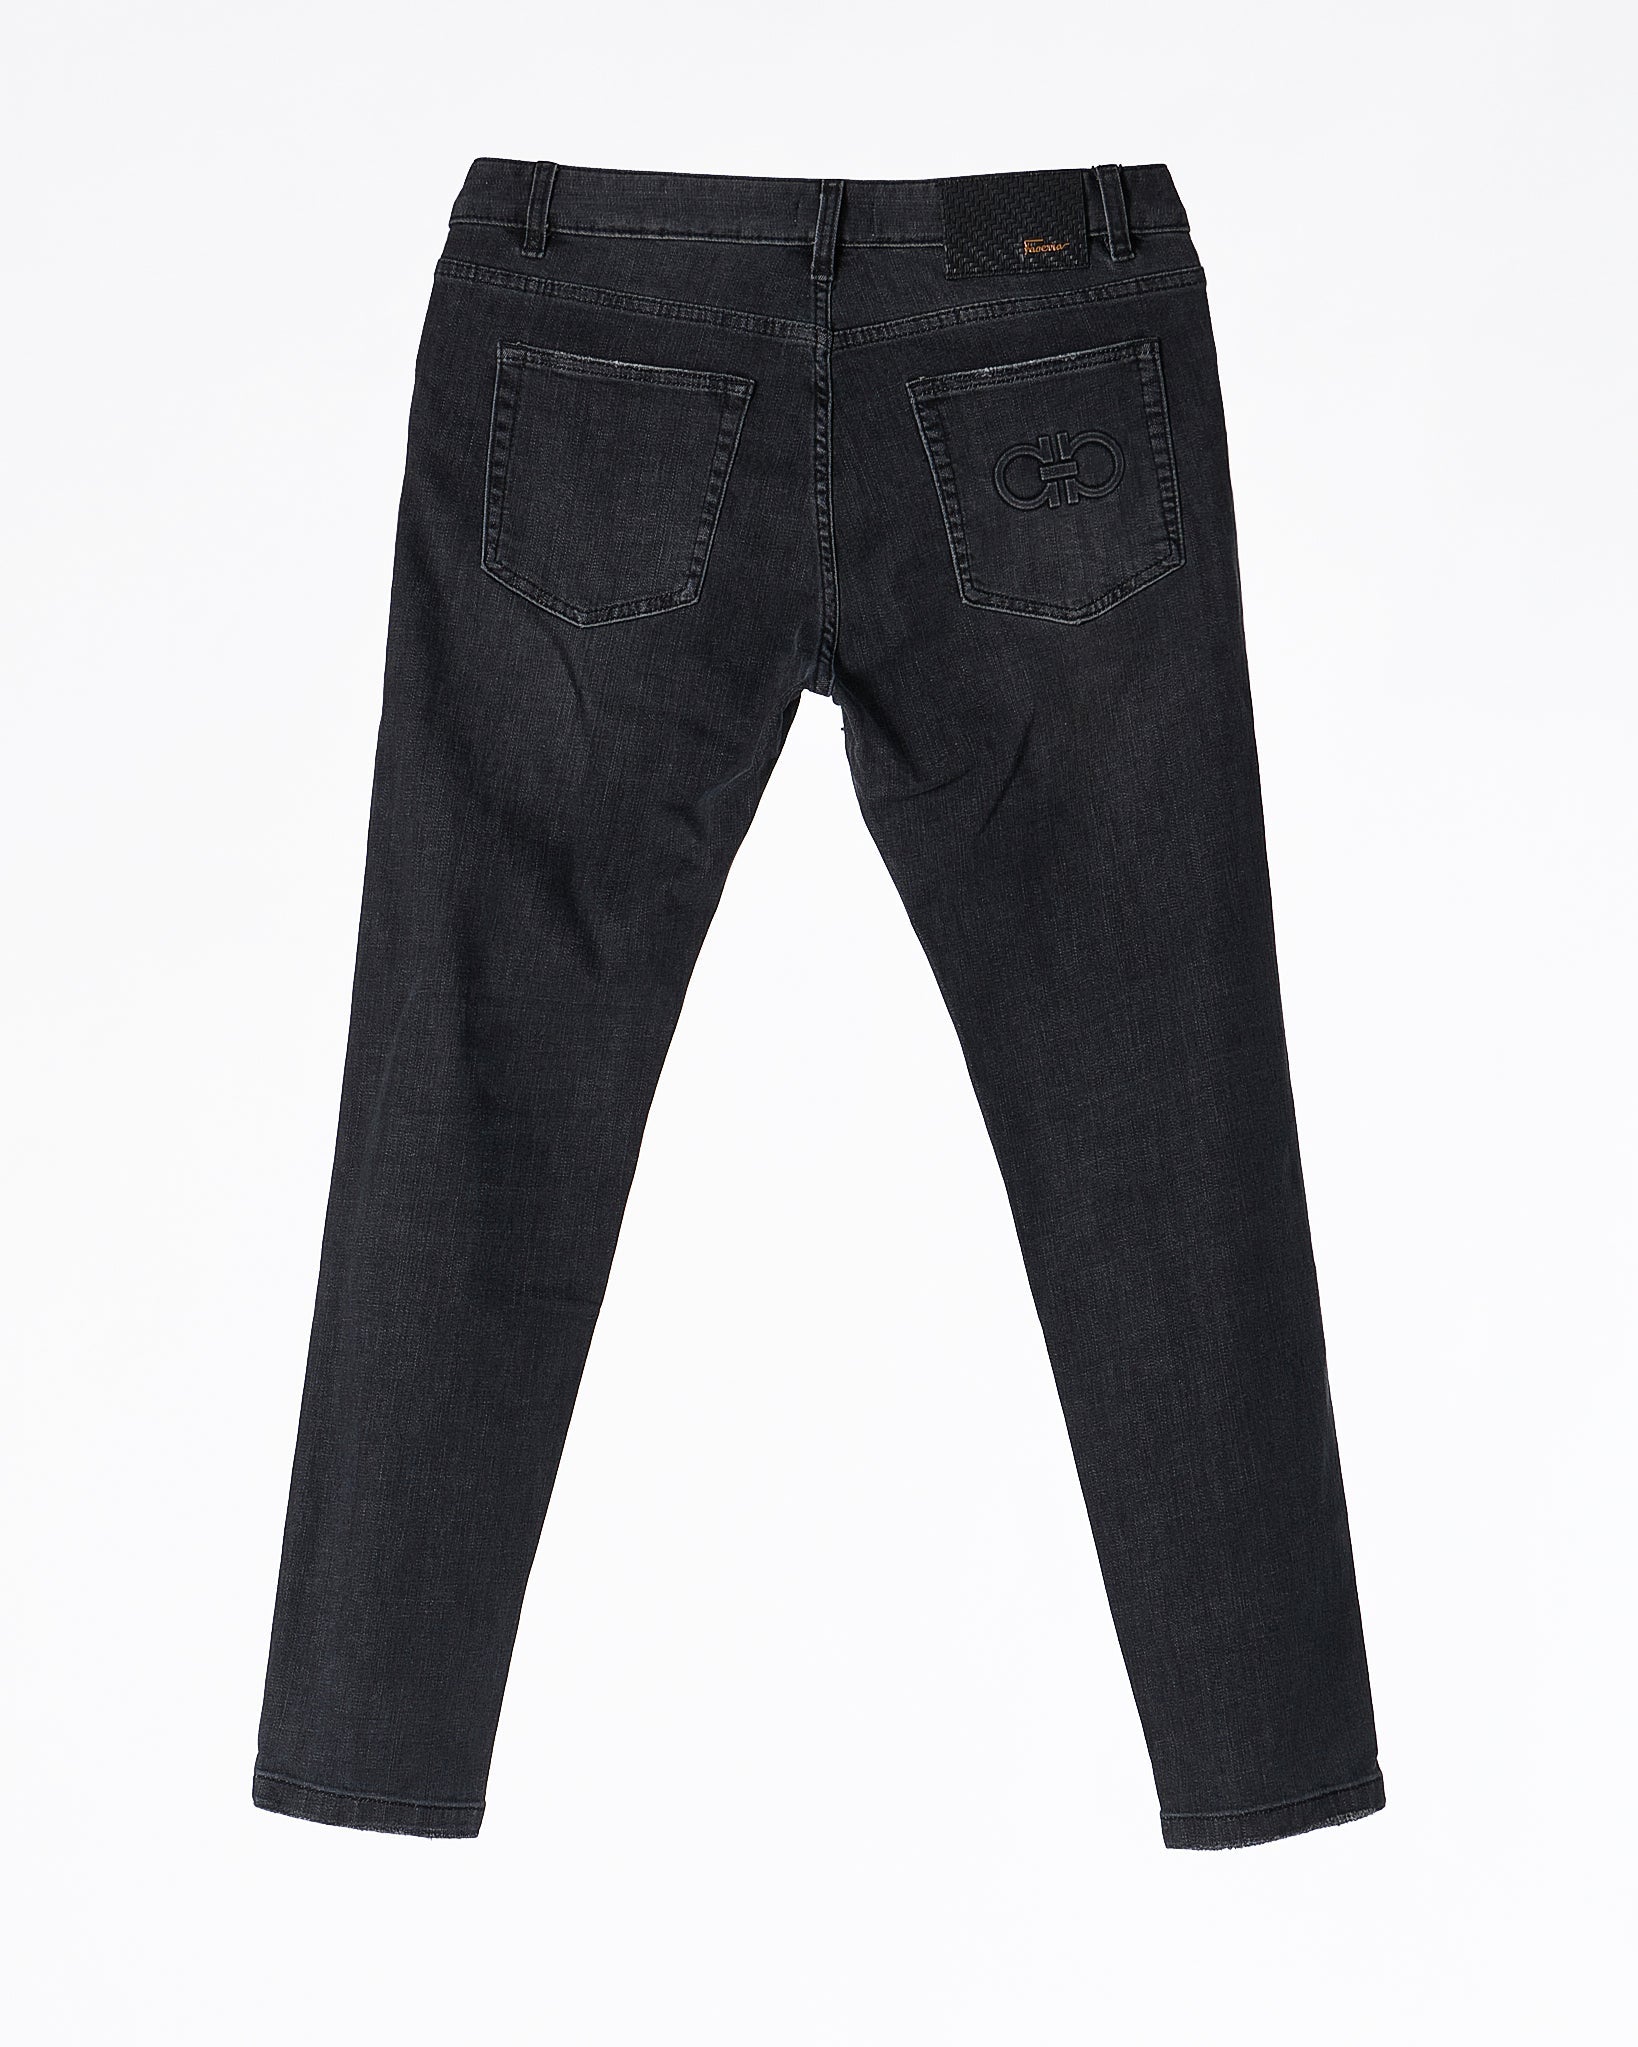 MOI OUTFIT-FR Slim Fit Men Jeans 68.90